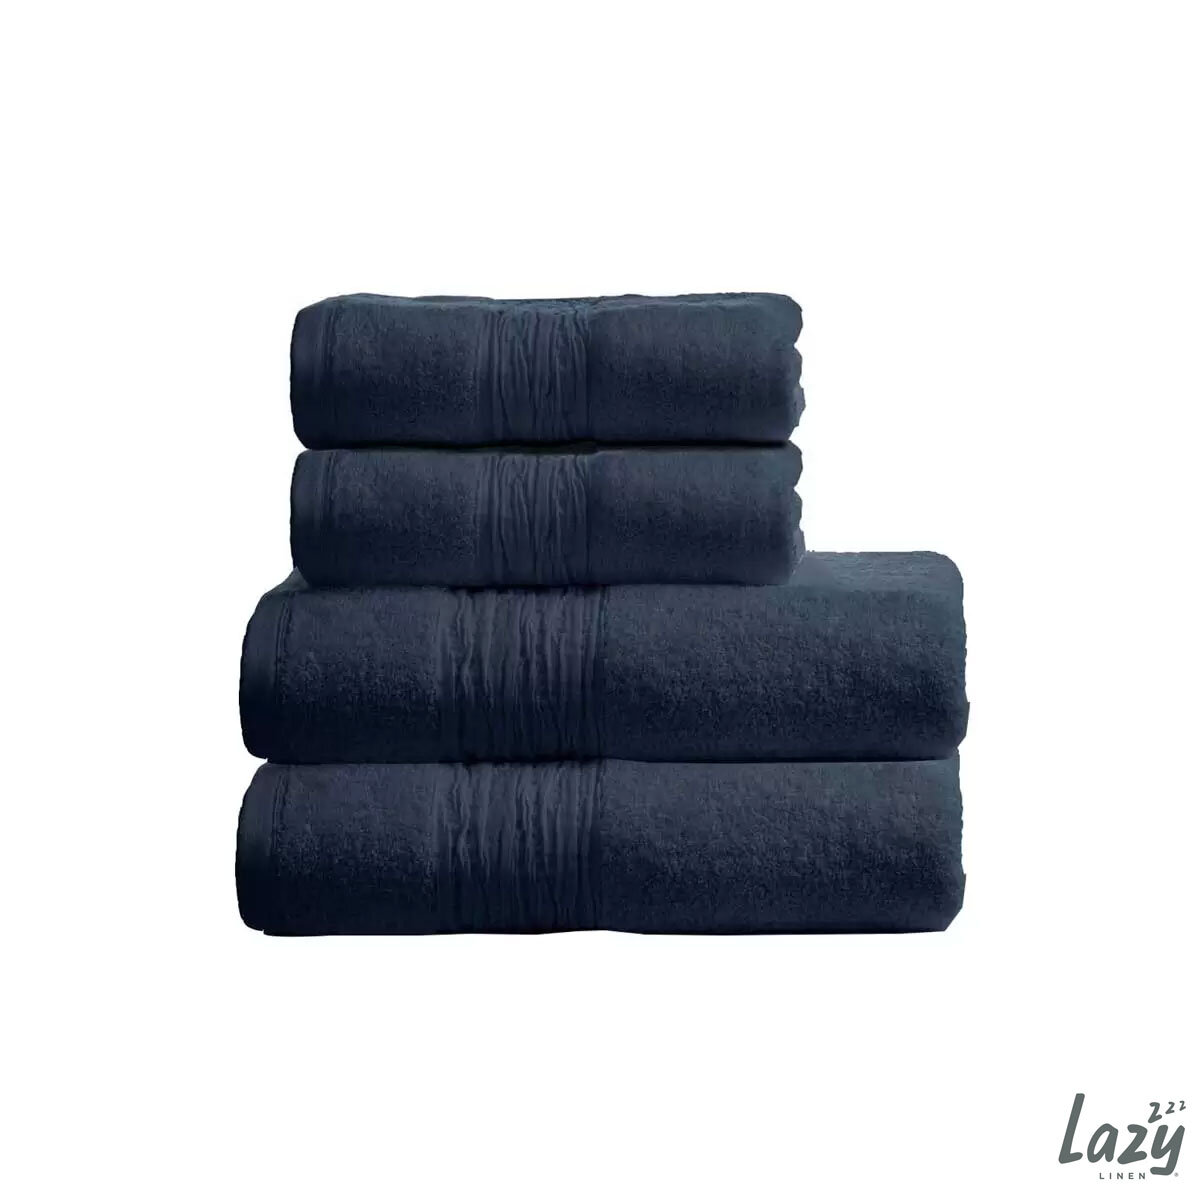 Lazy Linen 4 Piece Hand & Bath Towel Bundle in Navy, 2 x Hand Towels & 2 x Bath Towels